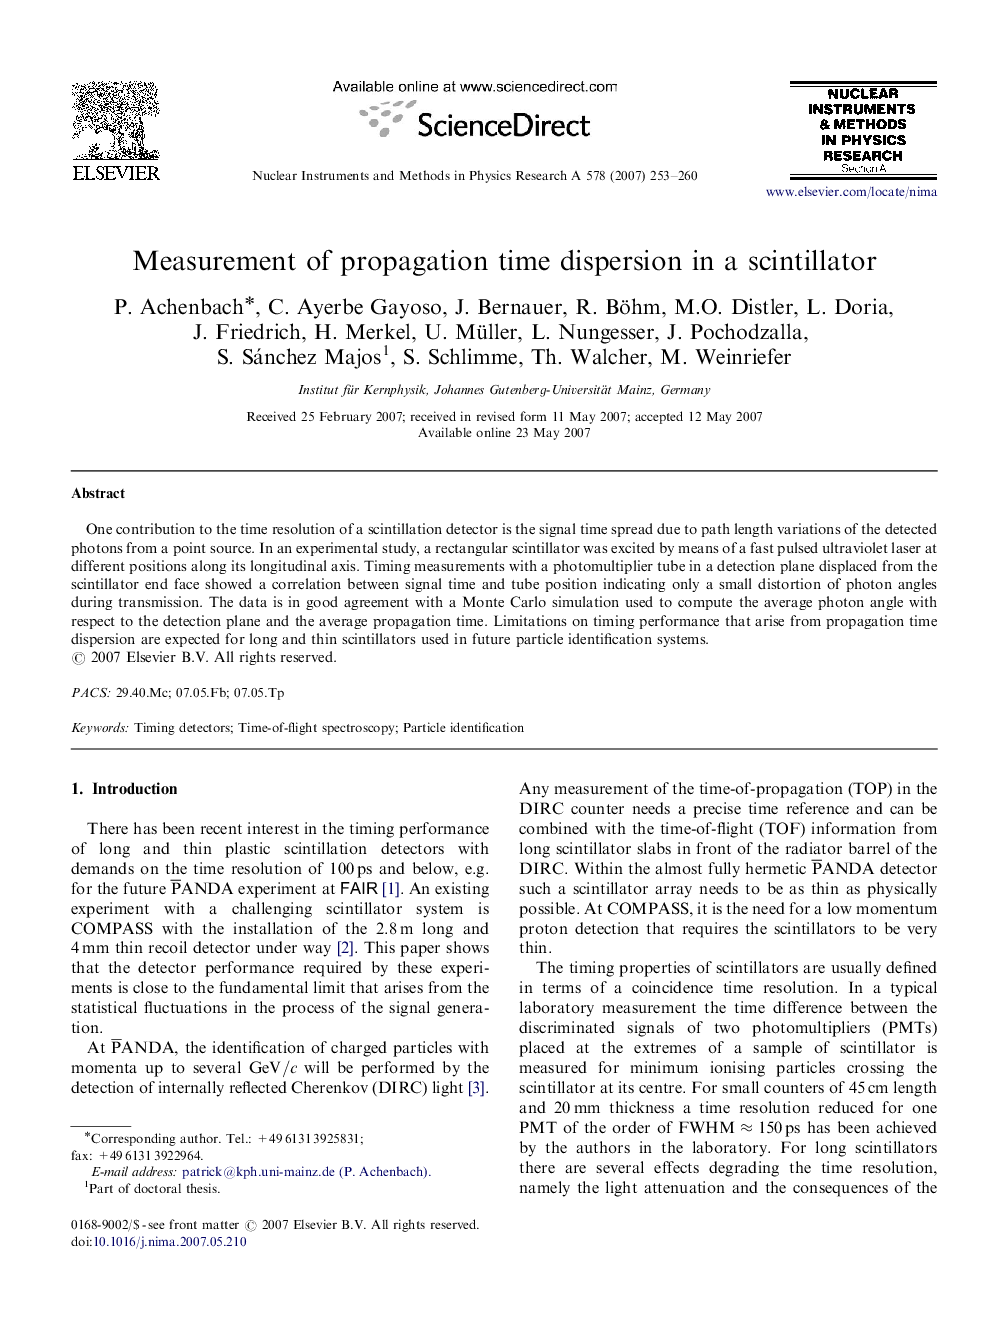 Measurement of propagation time dispersion in a scintillator